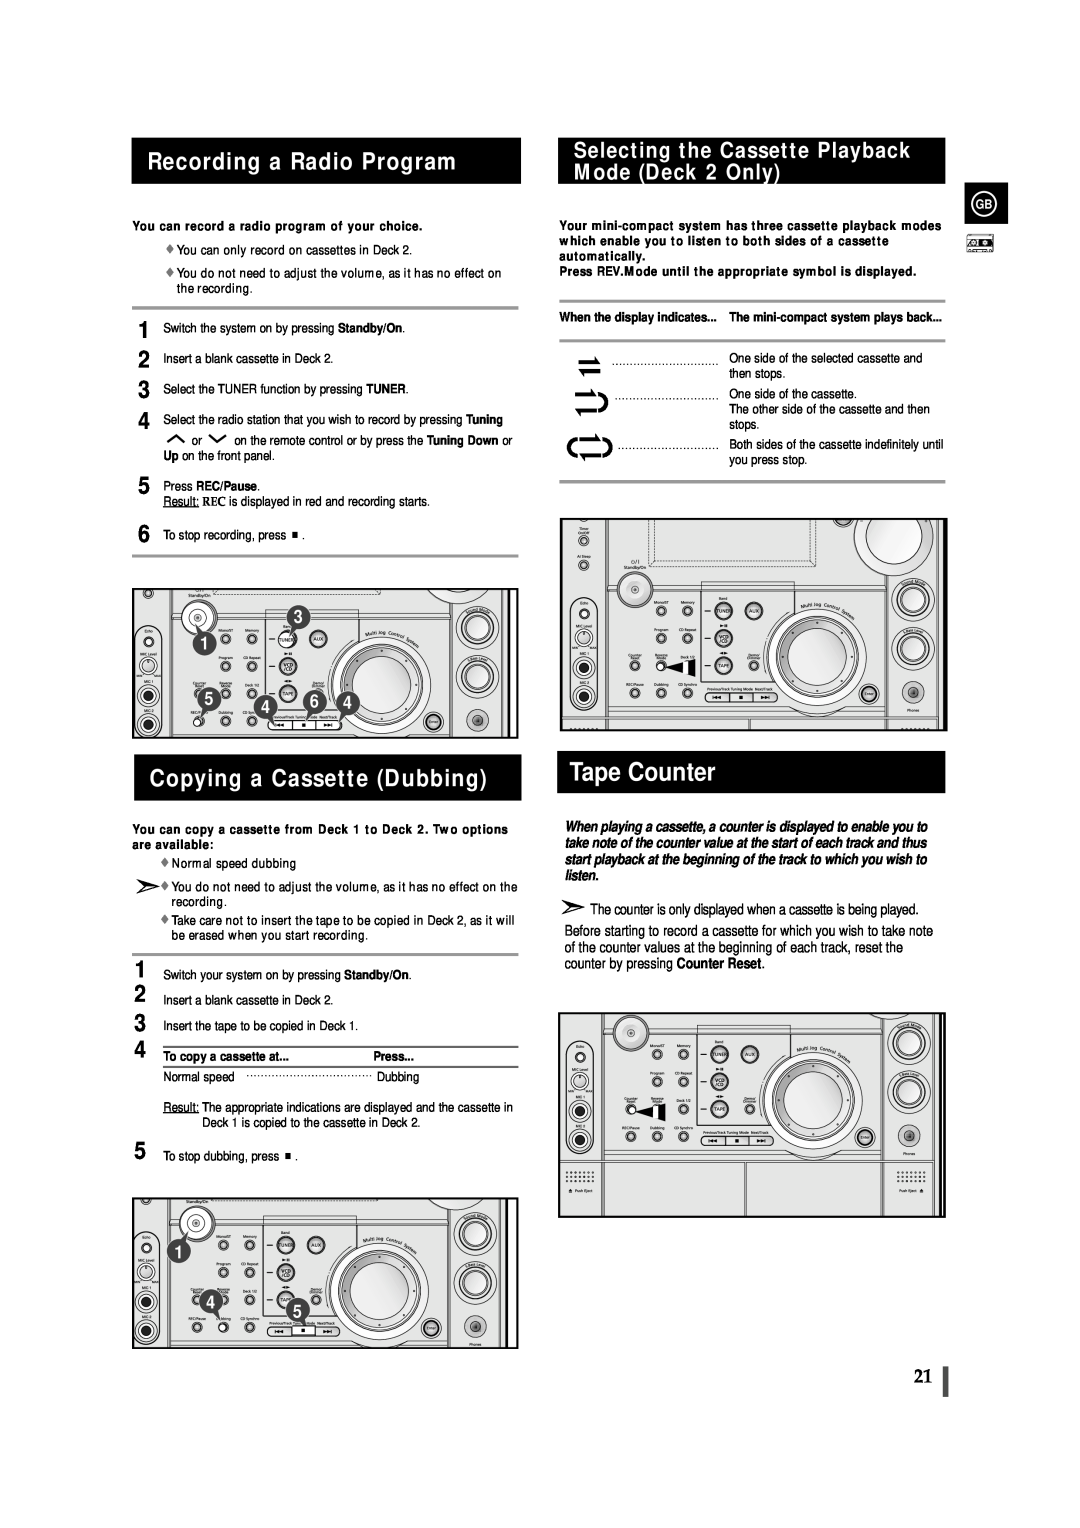 Samsung MAX-VS720 instruction manual Recording a Radio Program, Copying a Cassette Dubbing, Tape Counter 